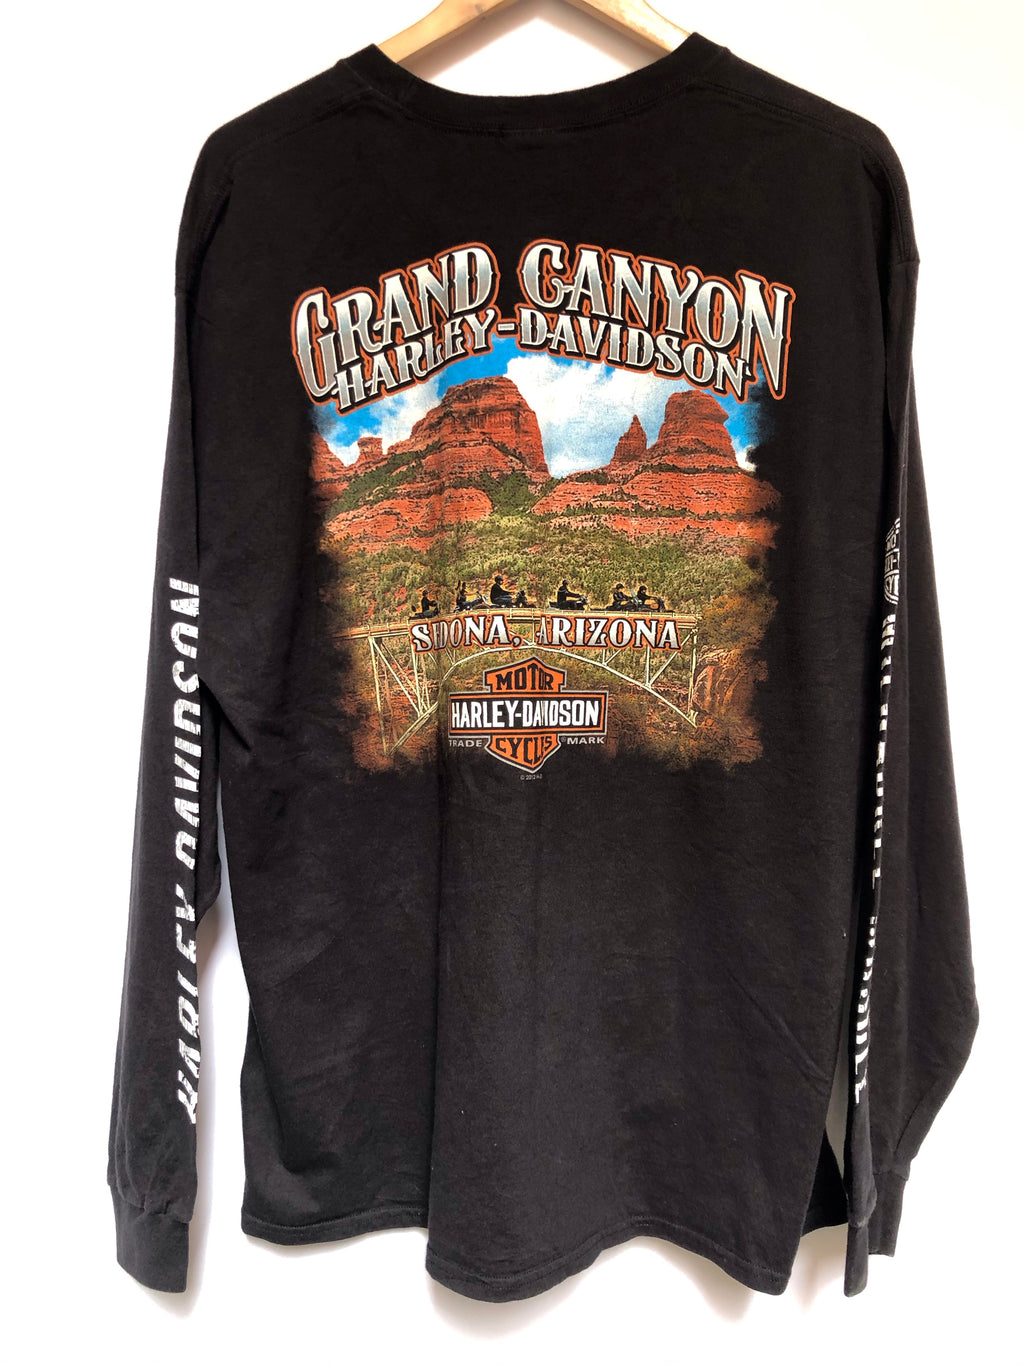 Grand Canyon Harley